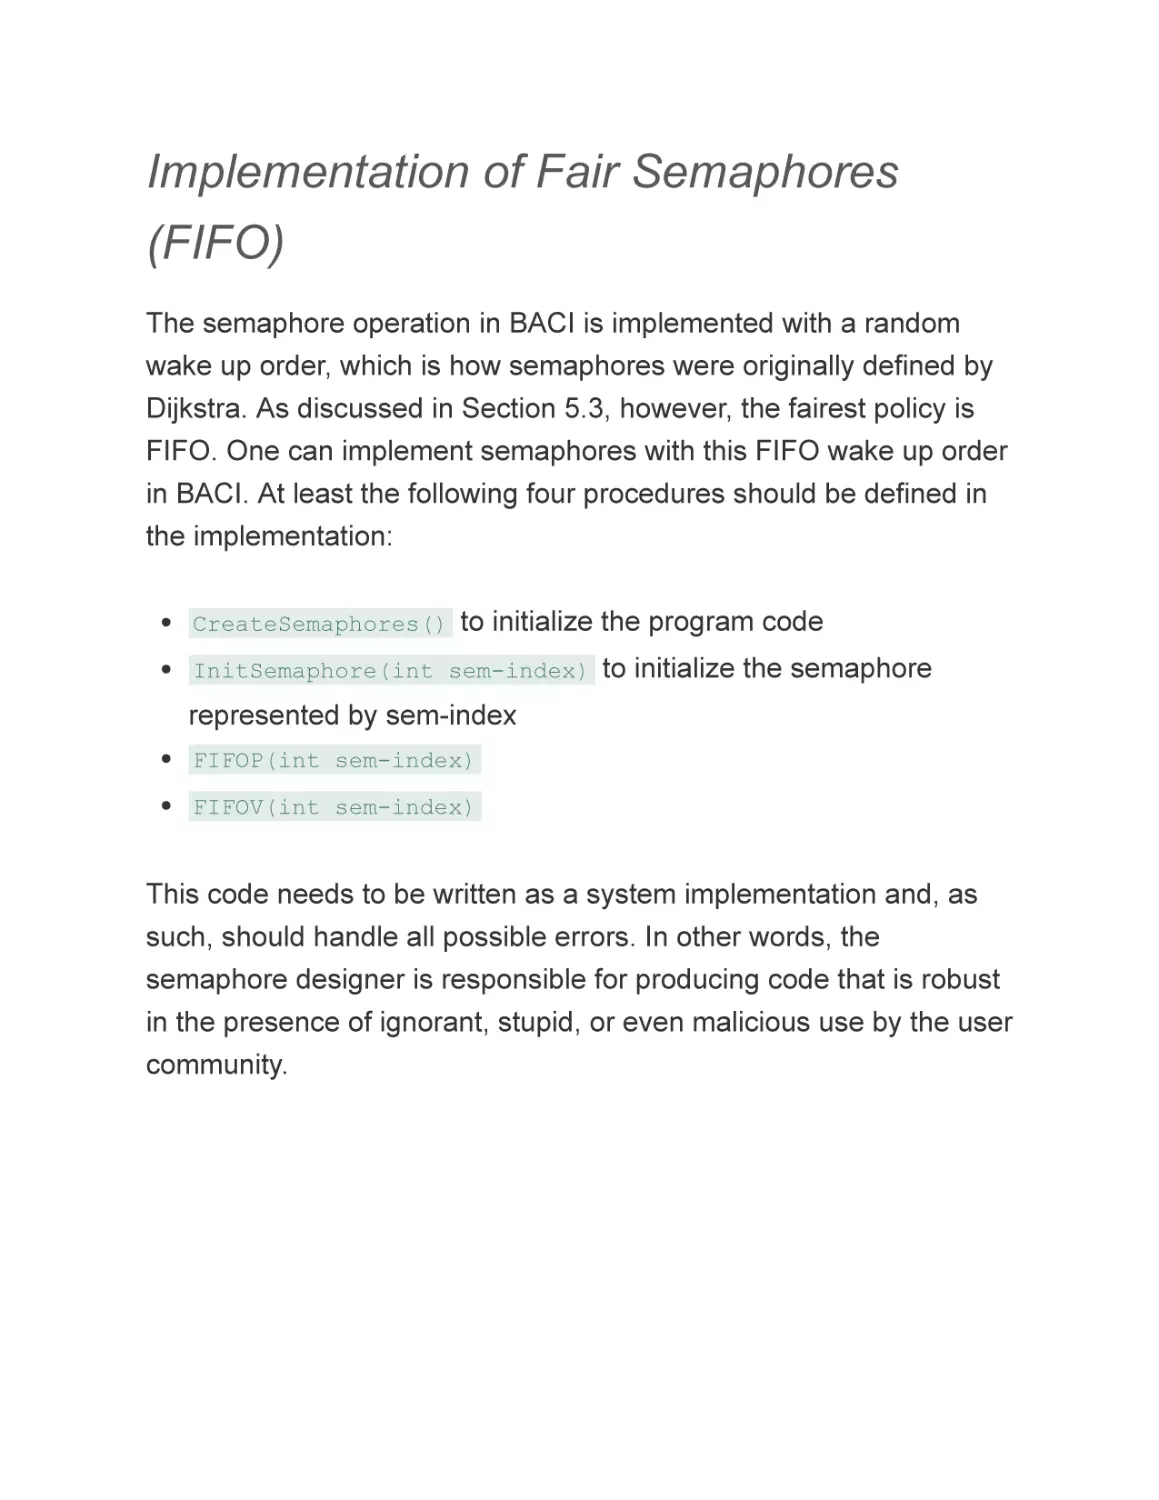 Implementation of Fair Semaphores (FIFO)